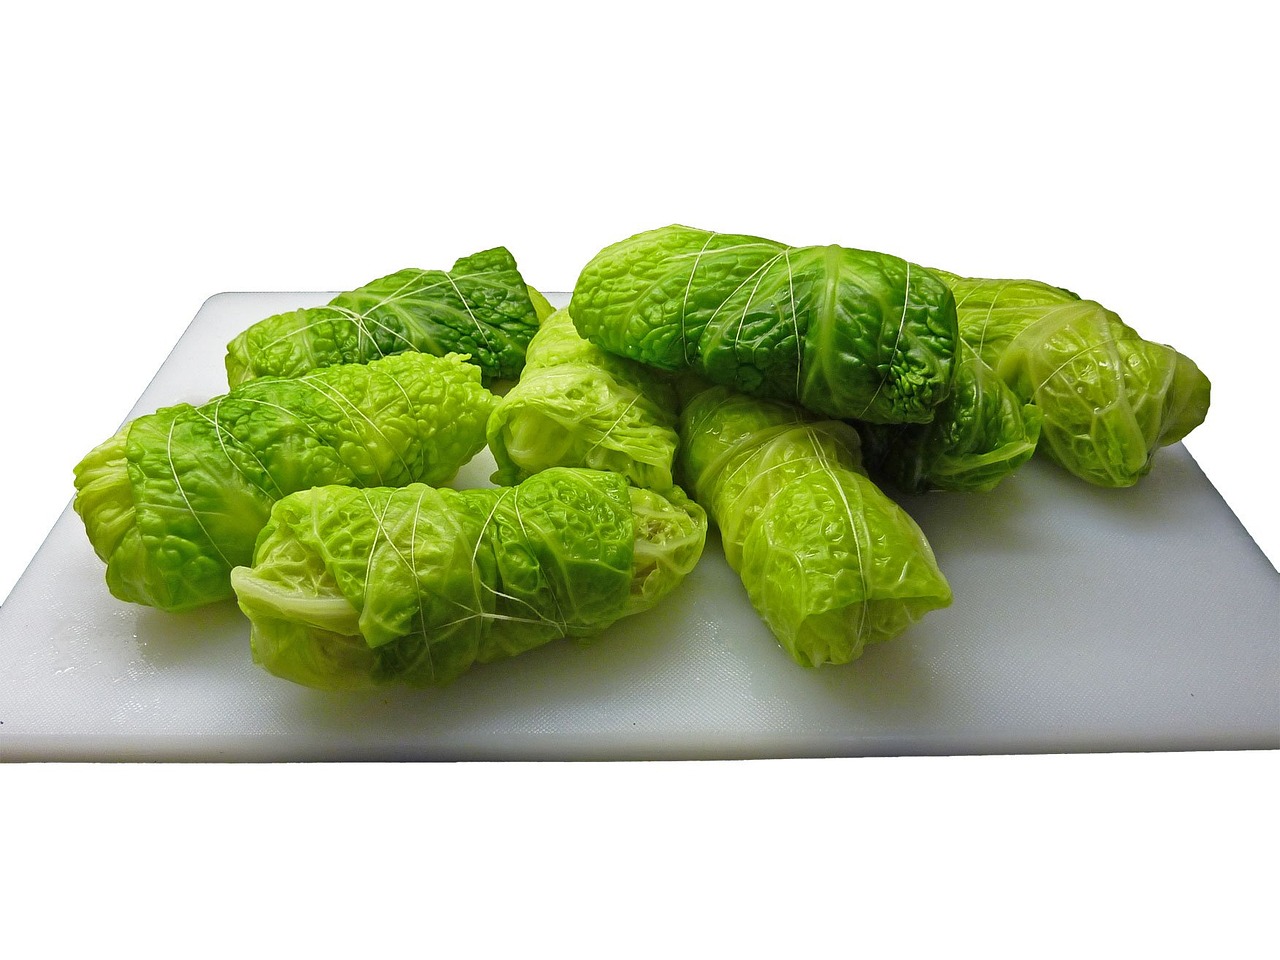 cabbage-rolls-g4085707ce_1280